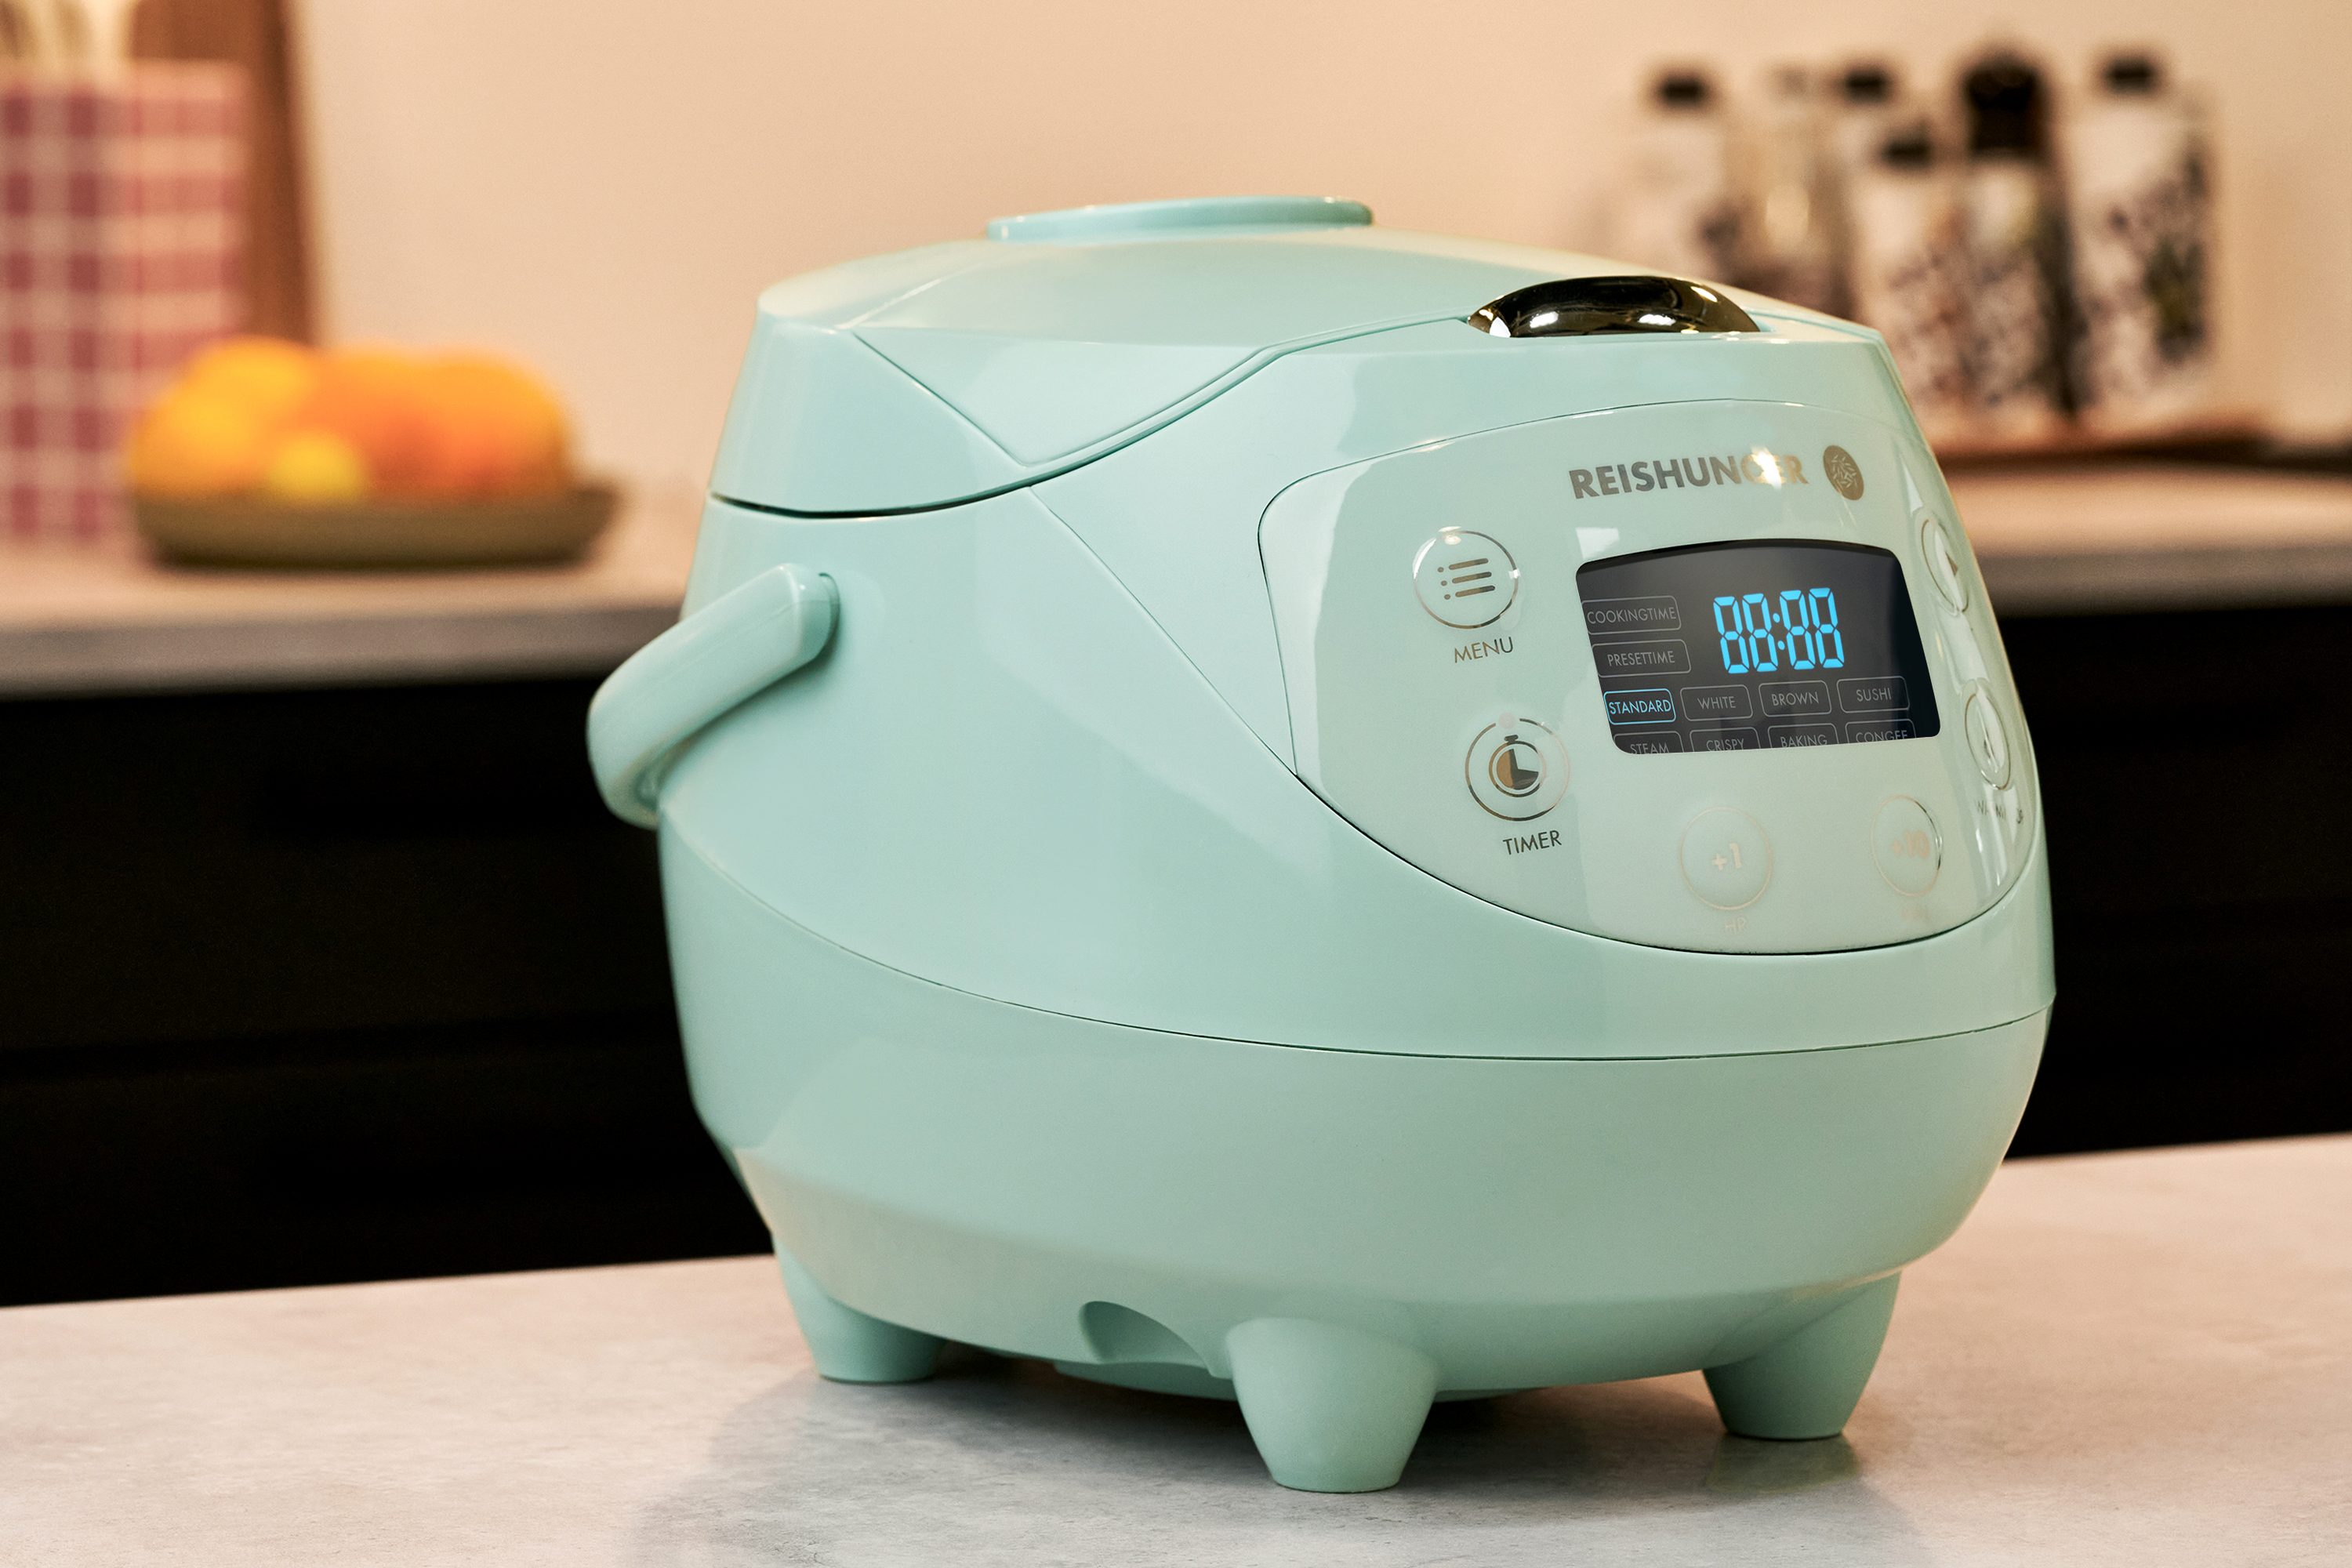 Reiskocher und Watt, (350 Mint) Digitaler Mini REISHUNGER Reiskocher Dampfgarer